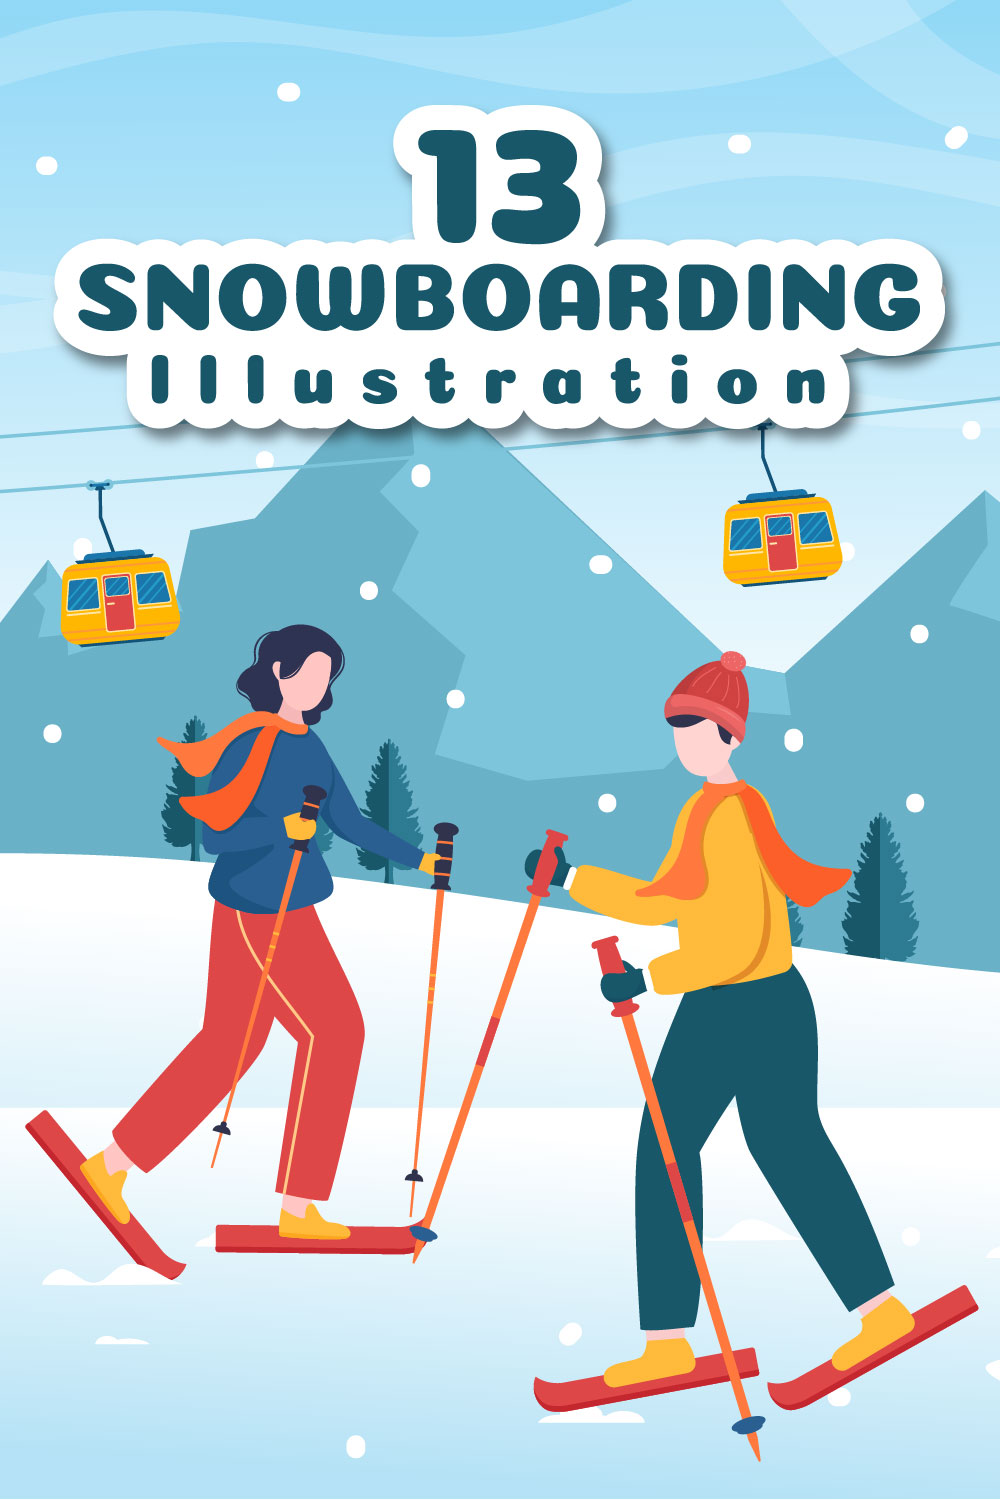 13 Snowboarding Activity Illustration Pinterest Image.